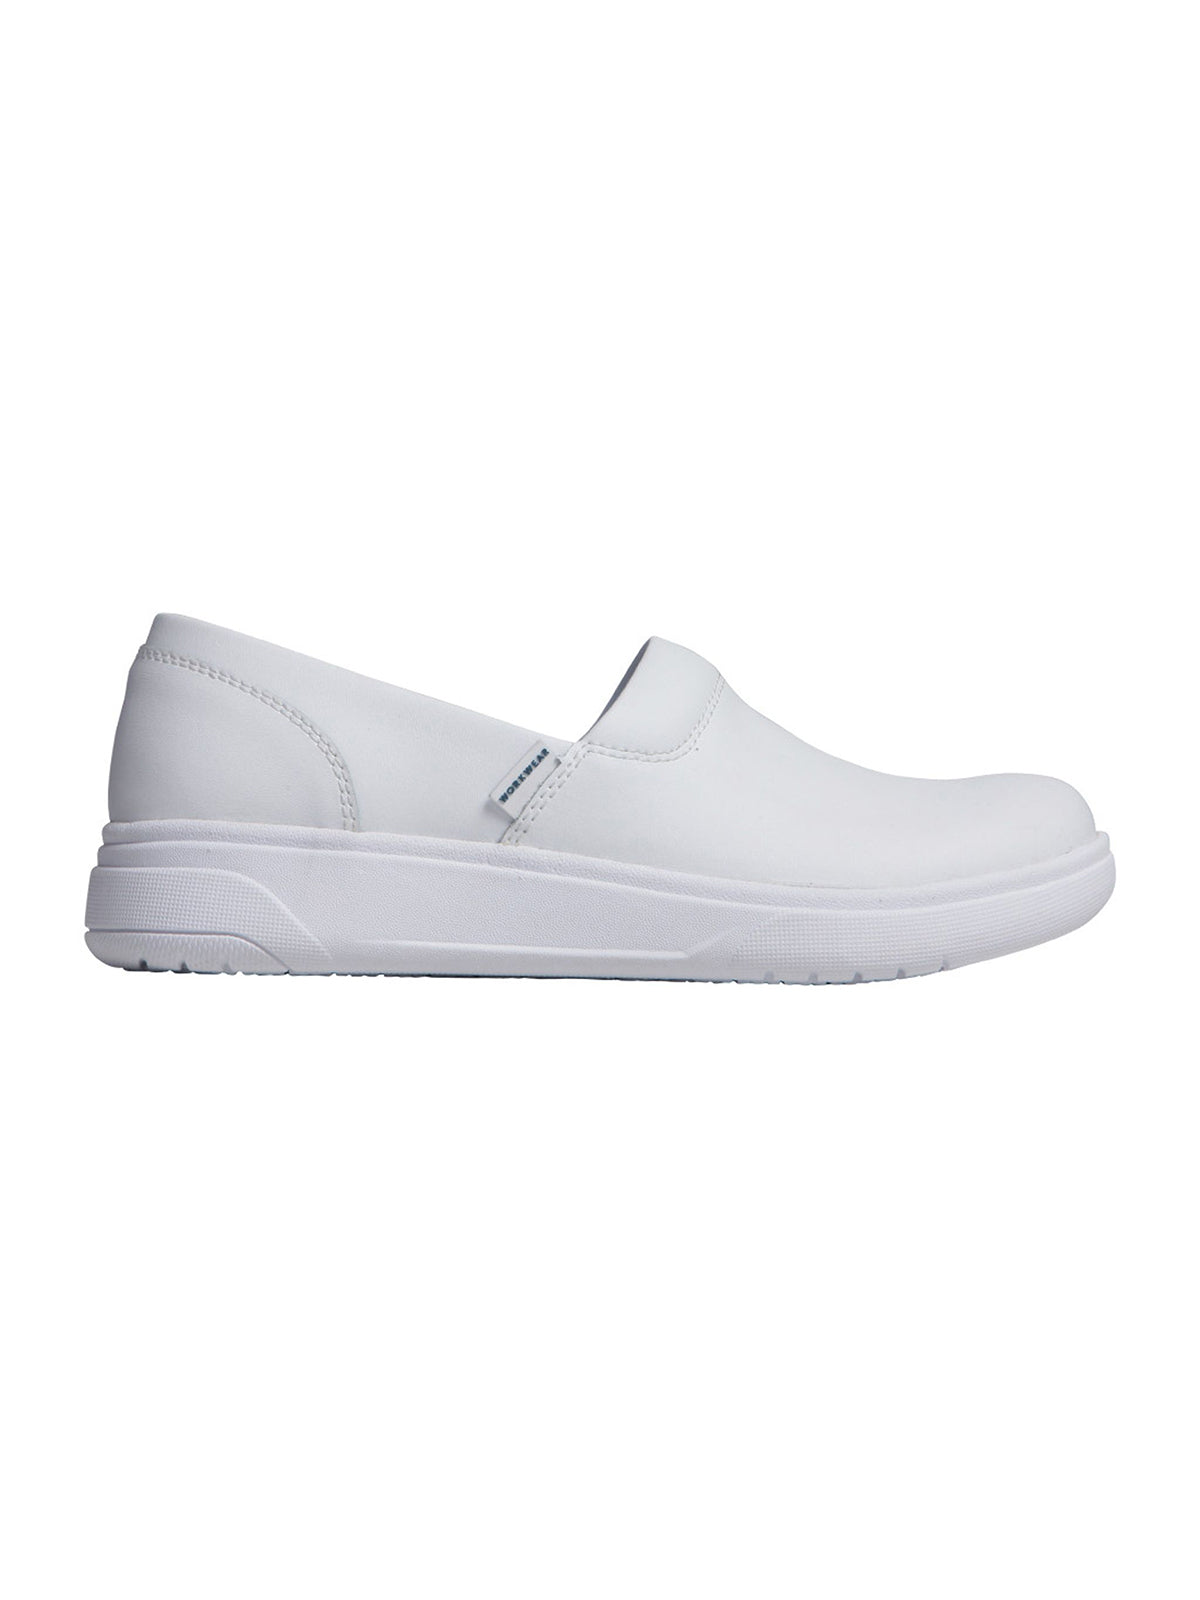 Cherokee Workwear Footwear Melody - MELODY - White